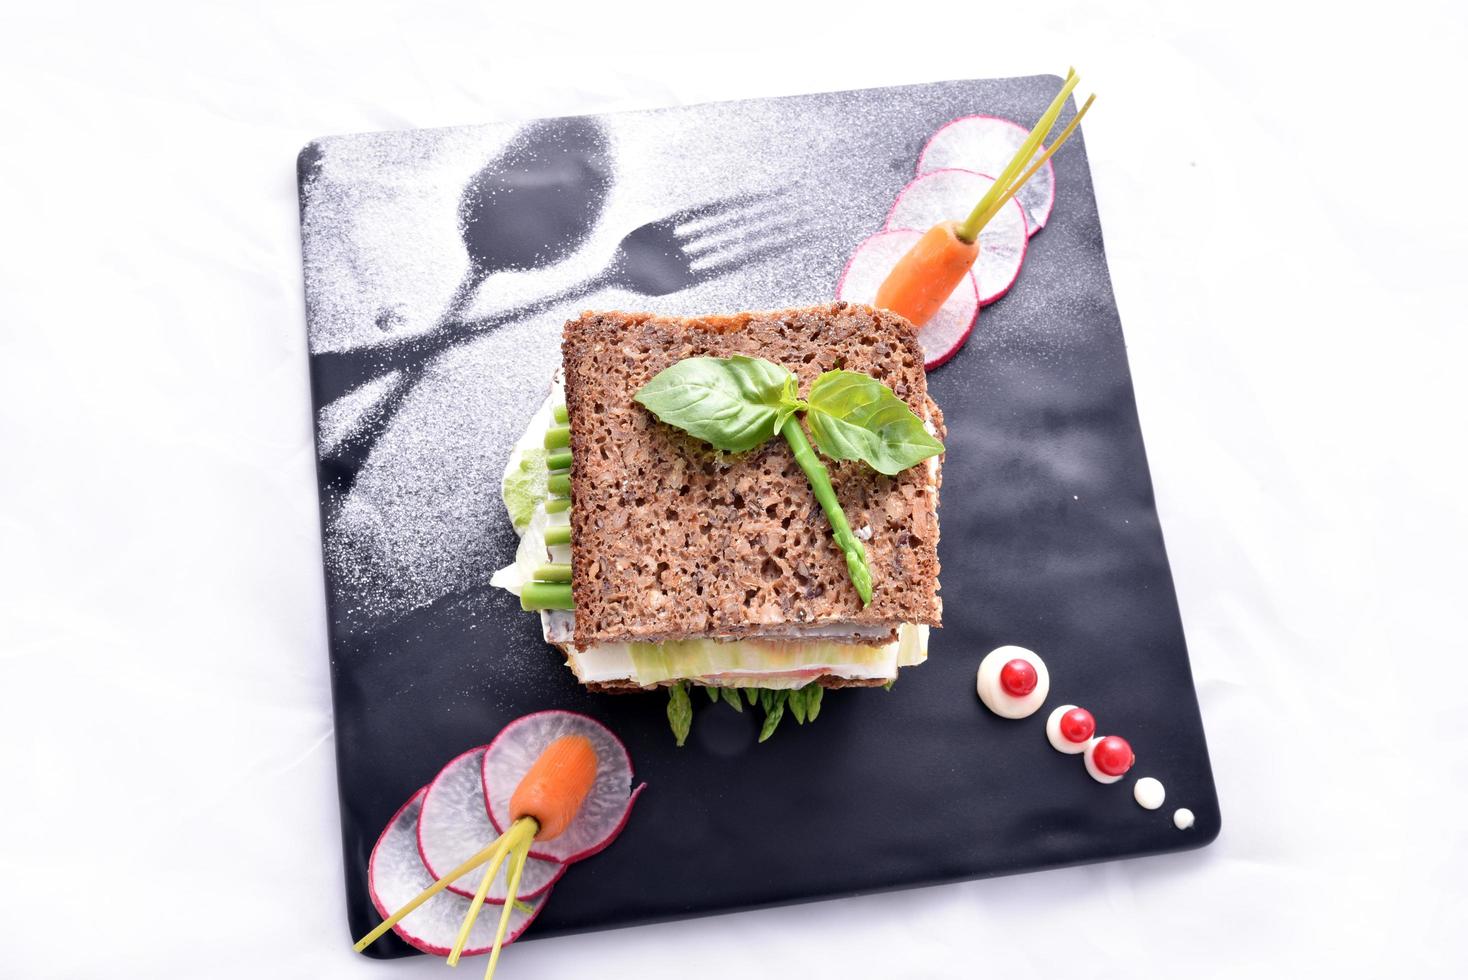 Asparagus sandwich with vegetables photo